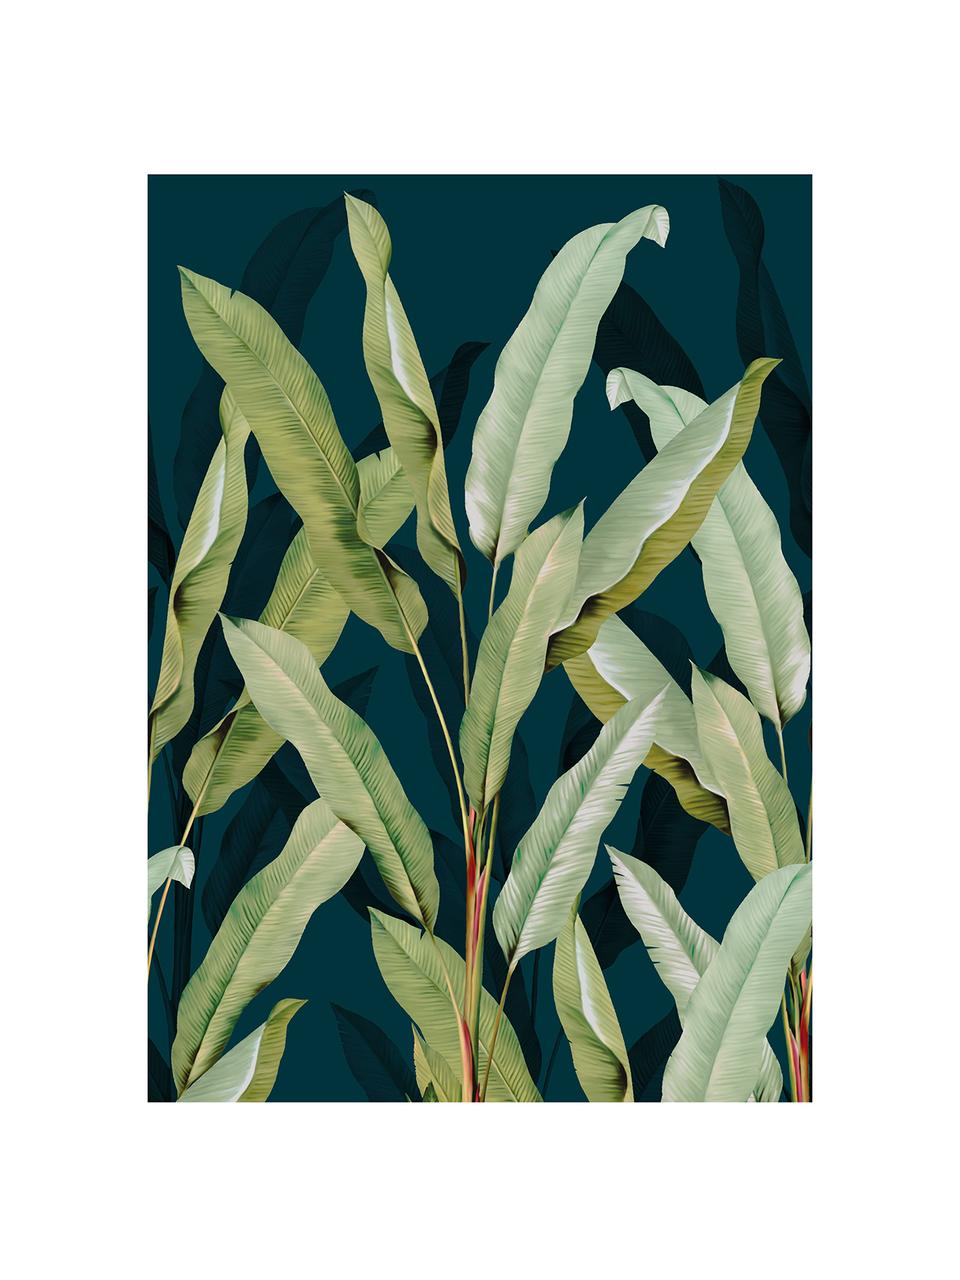 Papel pintado mural Olive Branch, Tejido no tejido, Azul, verde, An 200 x Al 280 cm